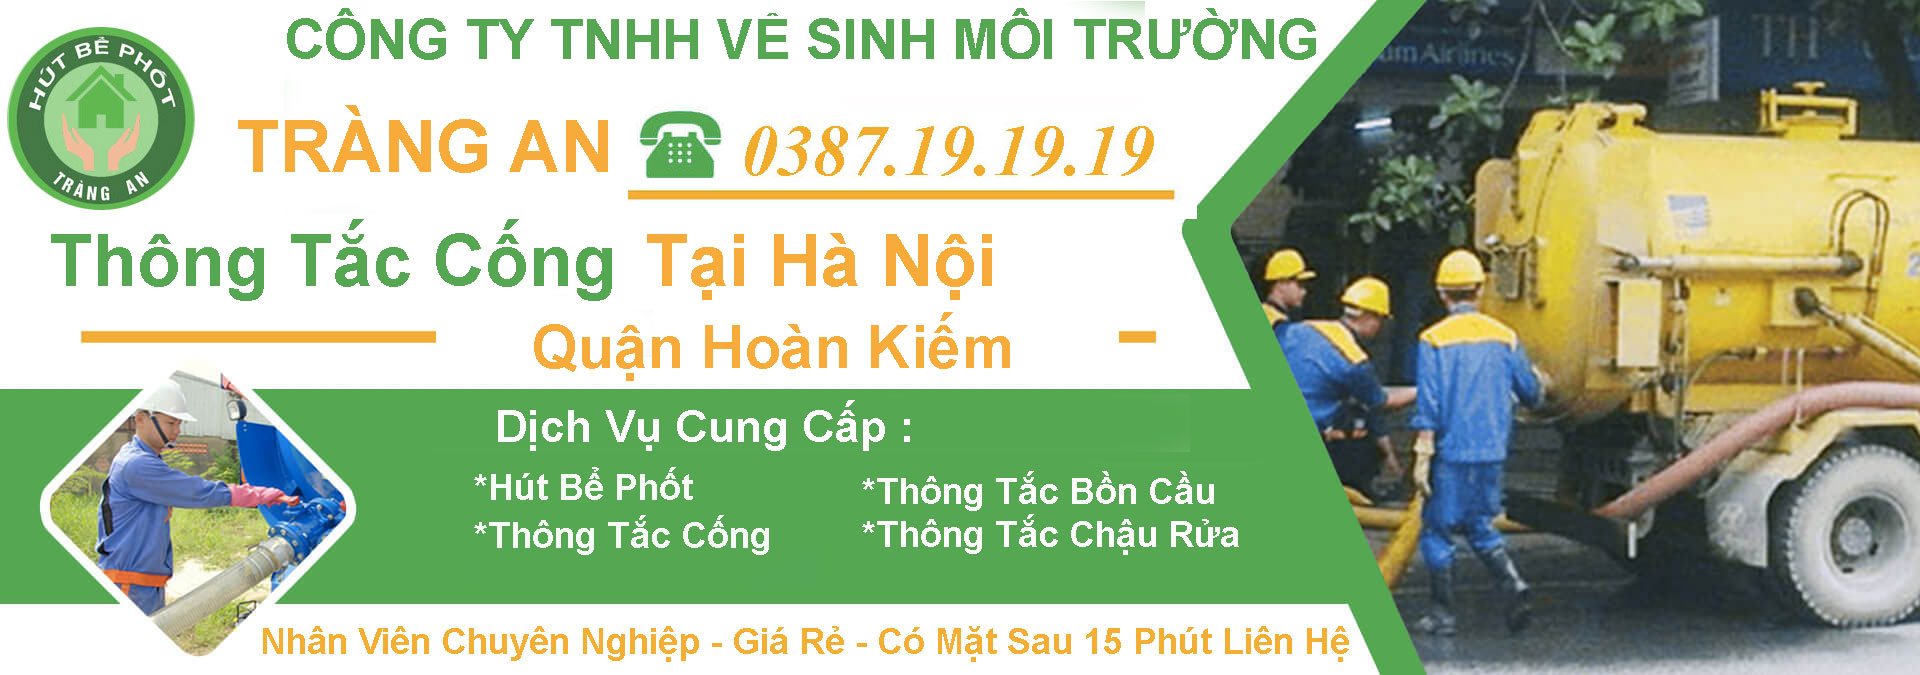 Thong Tac Cong Ha Noi Hoan Kiem